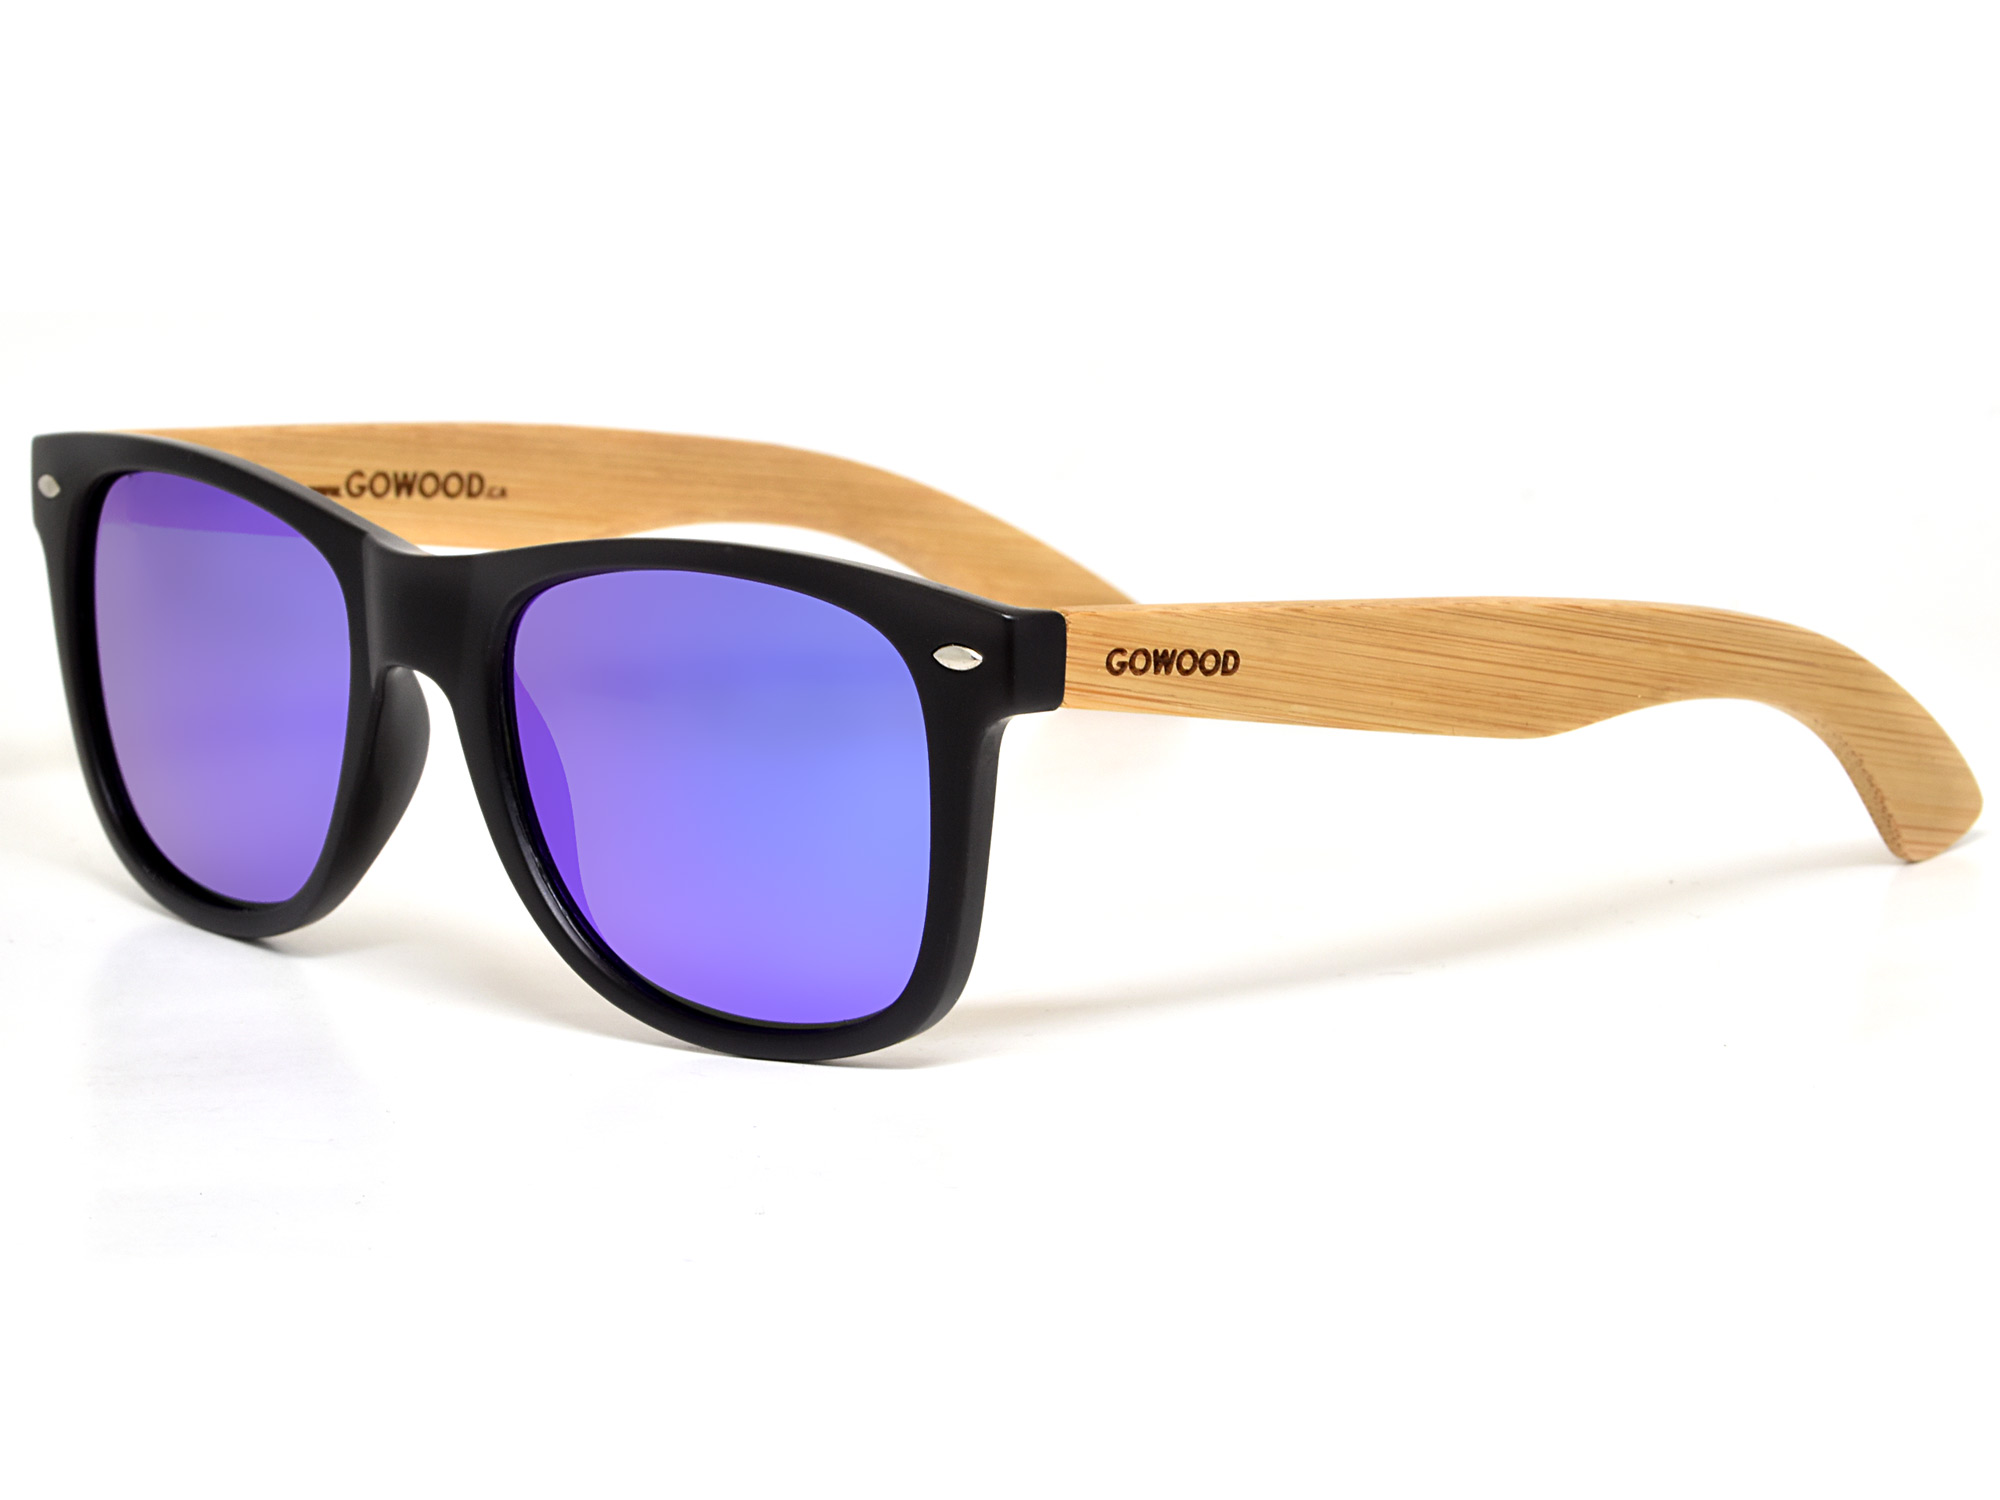 Bamboo wood sunglasses wayfarer style with blue mirrored polarized lenses